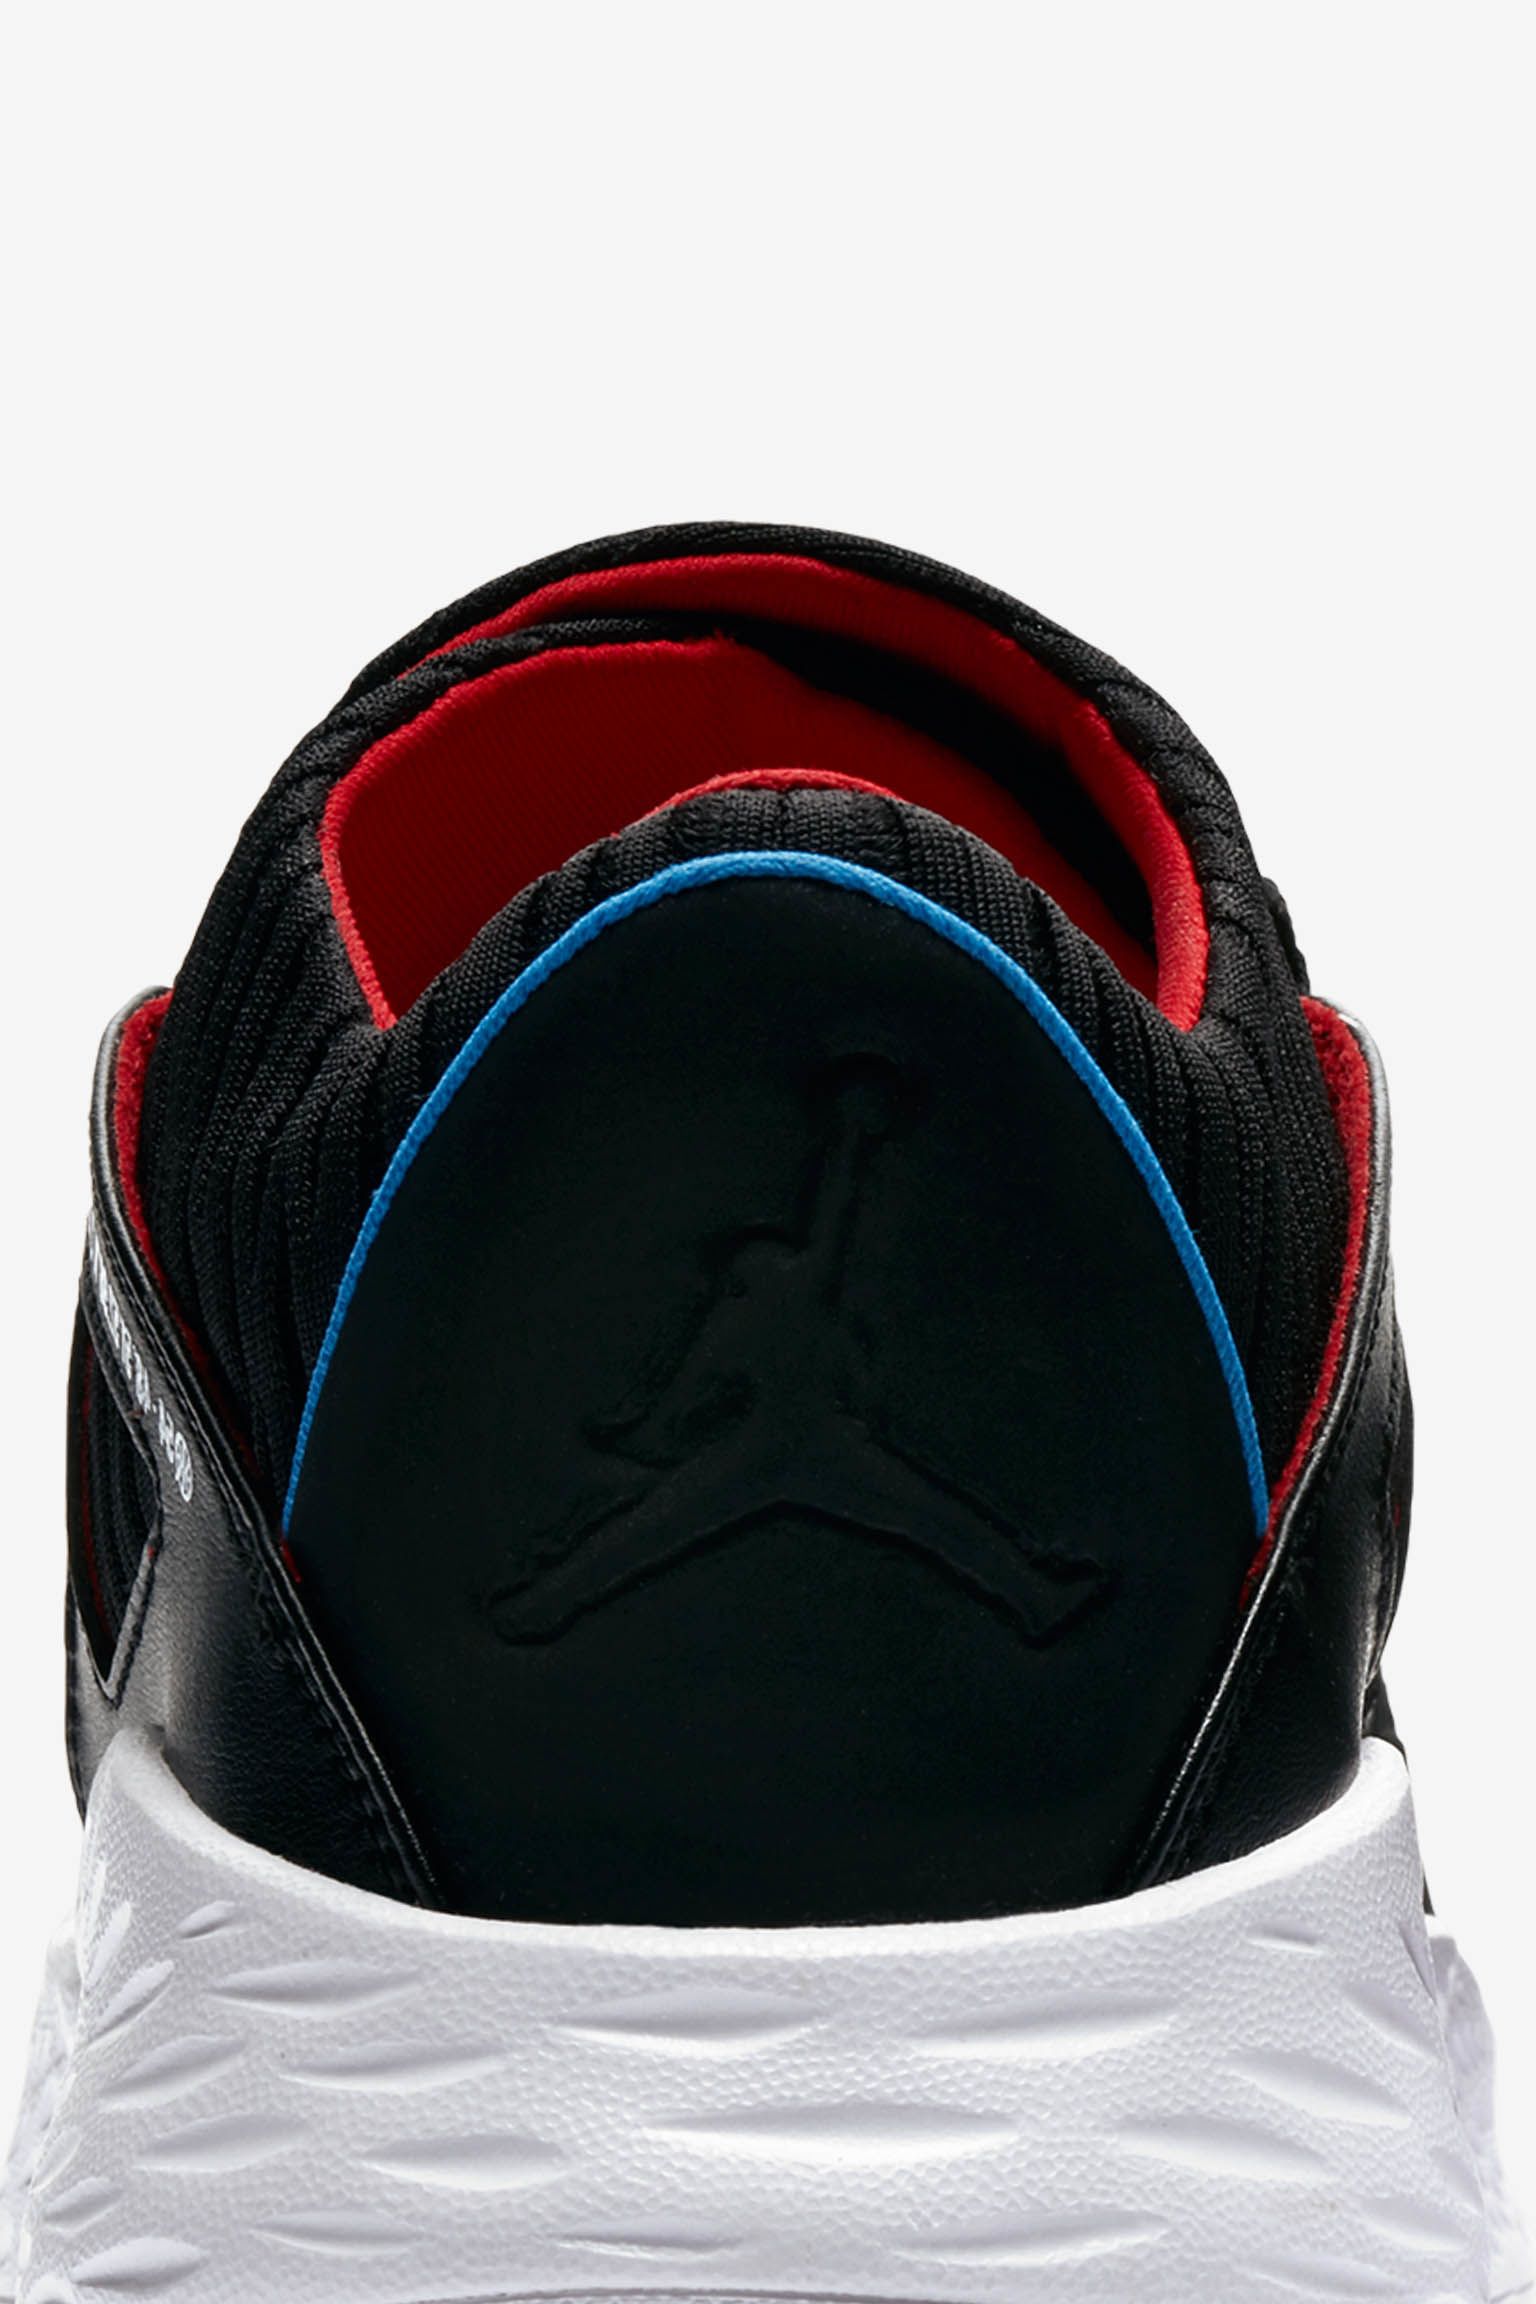 Jordan Formula 23 Low Quai 'Black & University Red' Release Date. Nike SNKRS